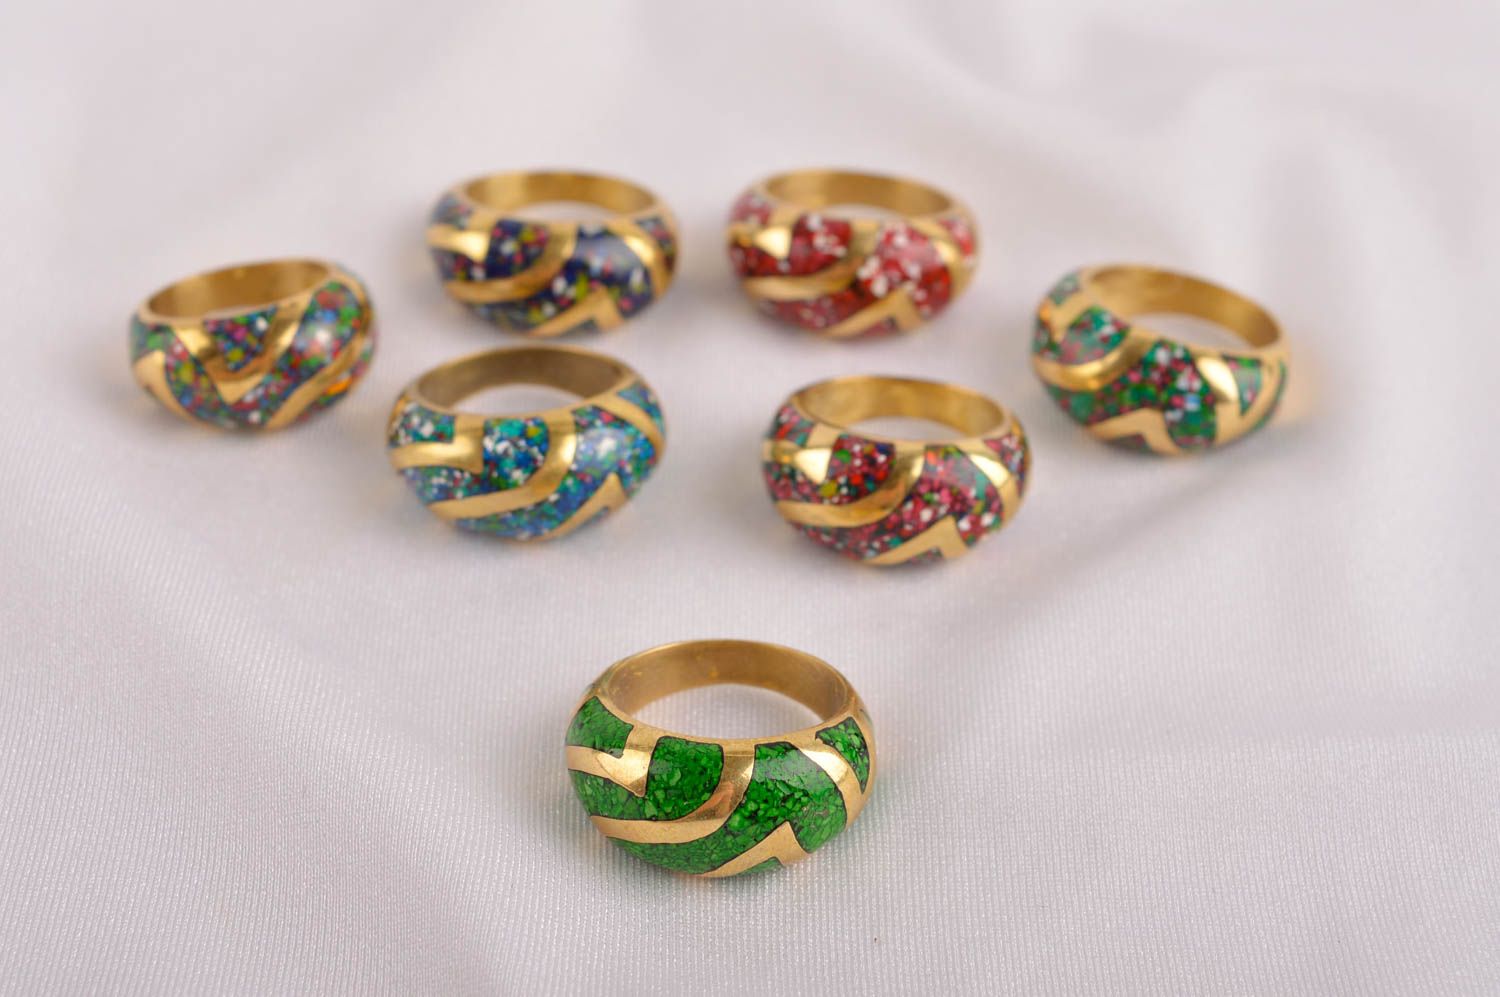 Handmade brass ring brass jewelry designer ring fashion jewelry for women photo 1